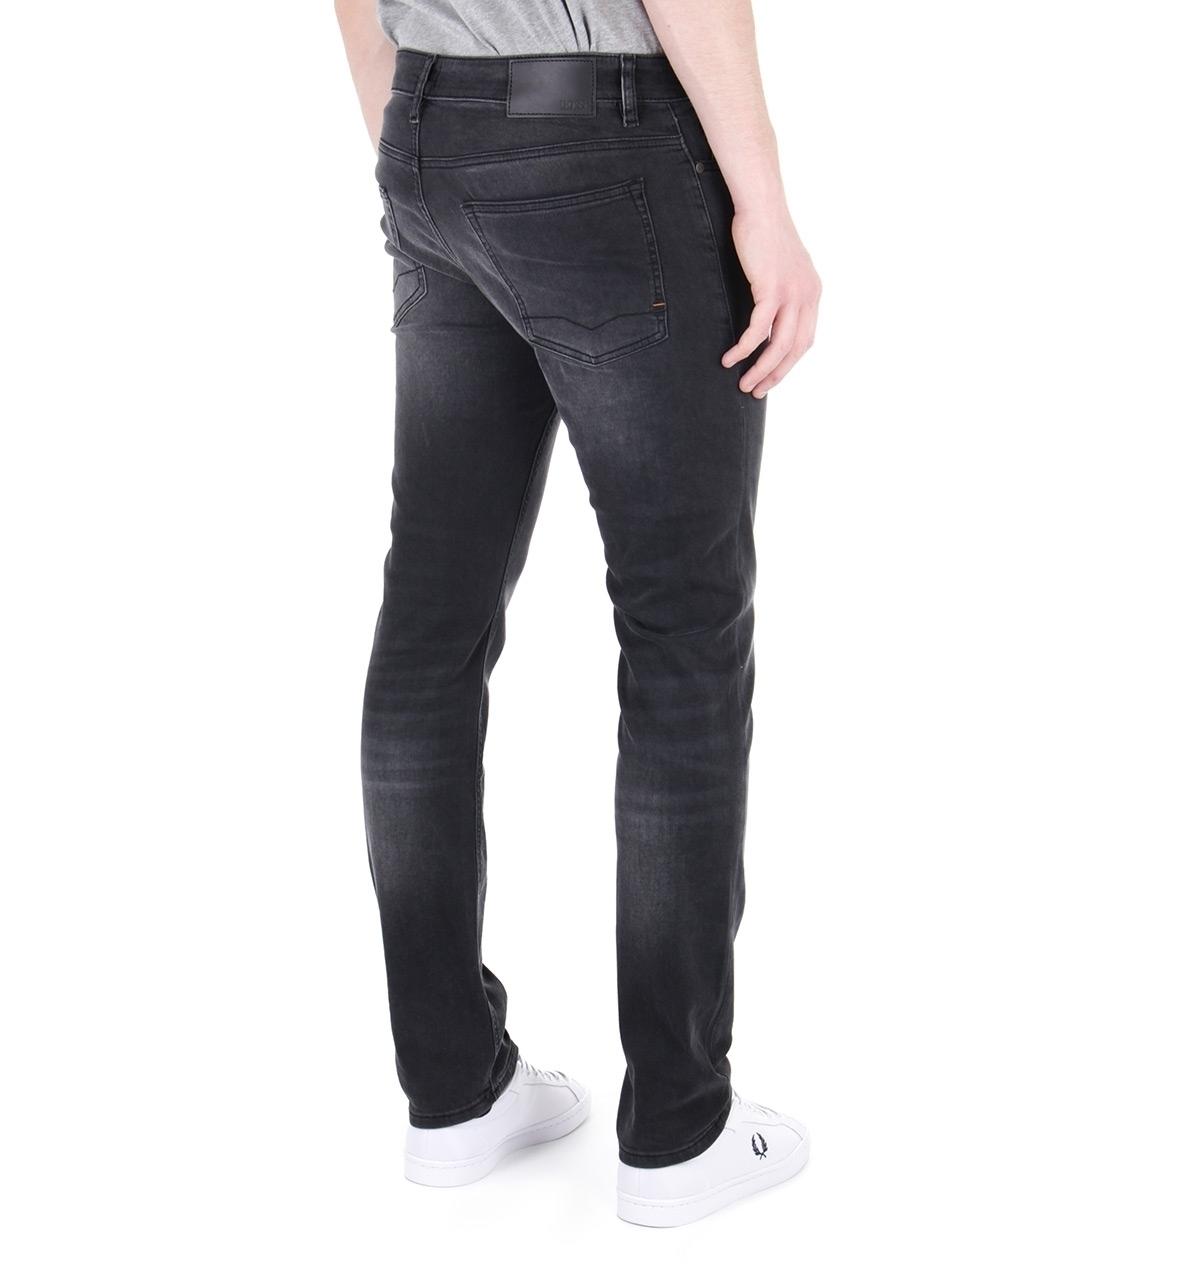 BOSS by HUGO BOSS Denim Delaware Grey Coal Slim Fit Jeans in Gray for Men -  Lyst